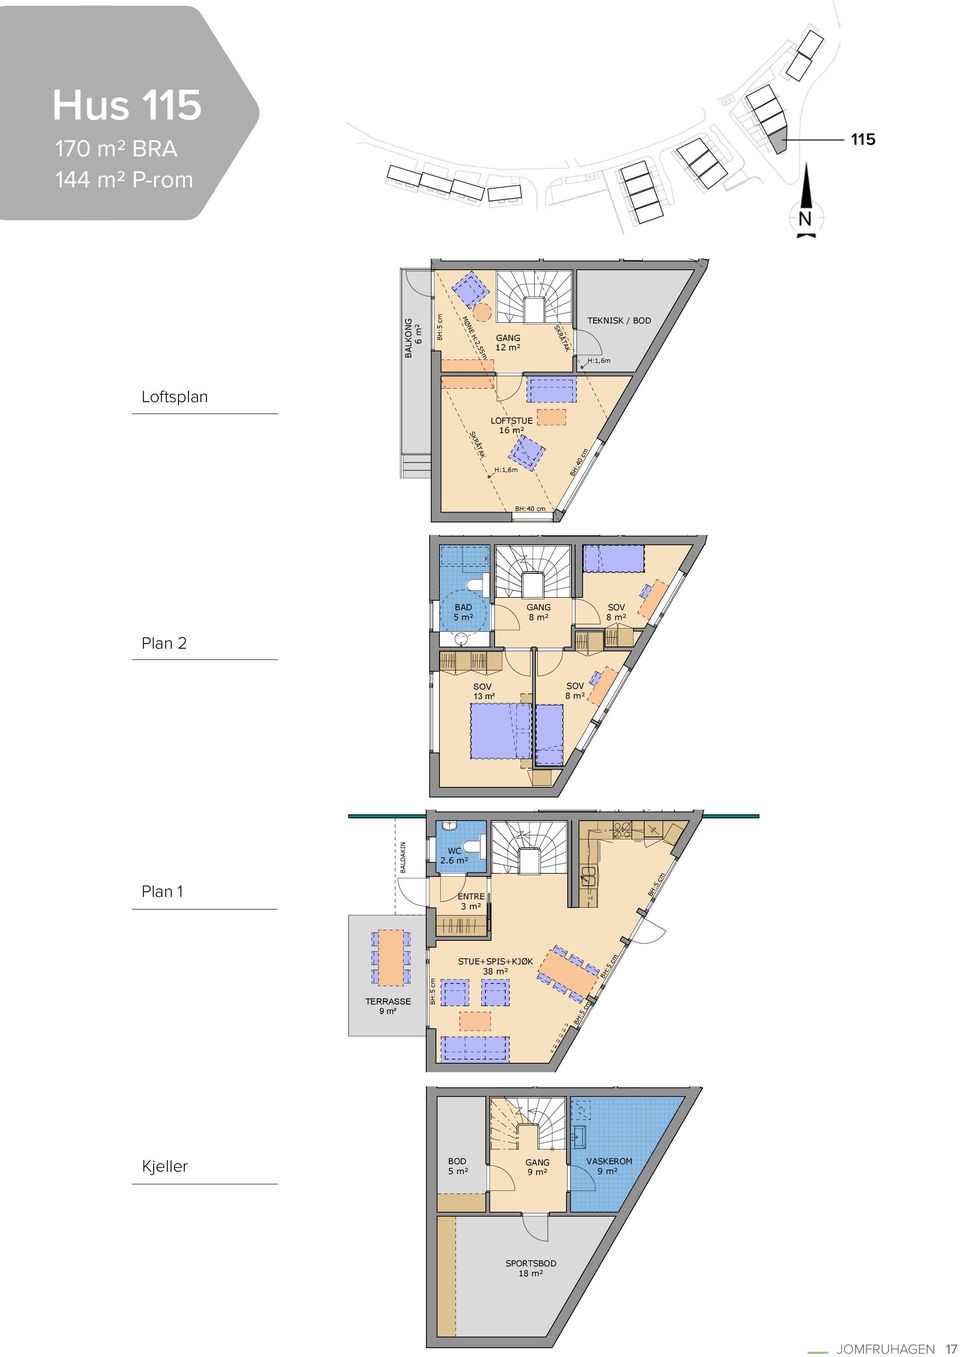 SOV 8 m² Plan 2 SOV 13 m² SOV 8 m² Plan 1 BALDAKIN WC 2.